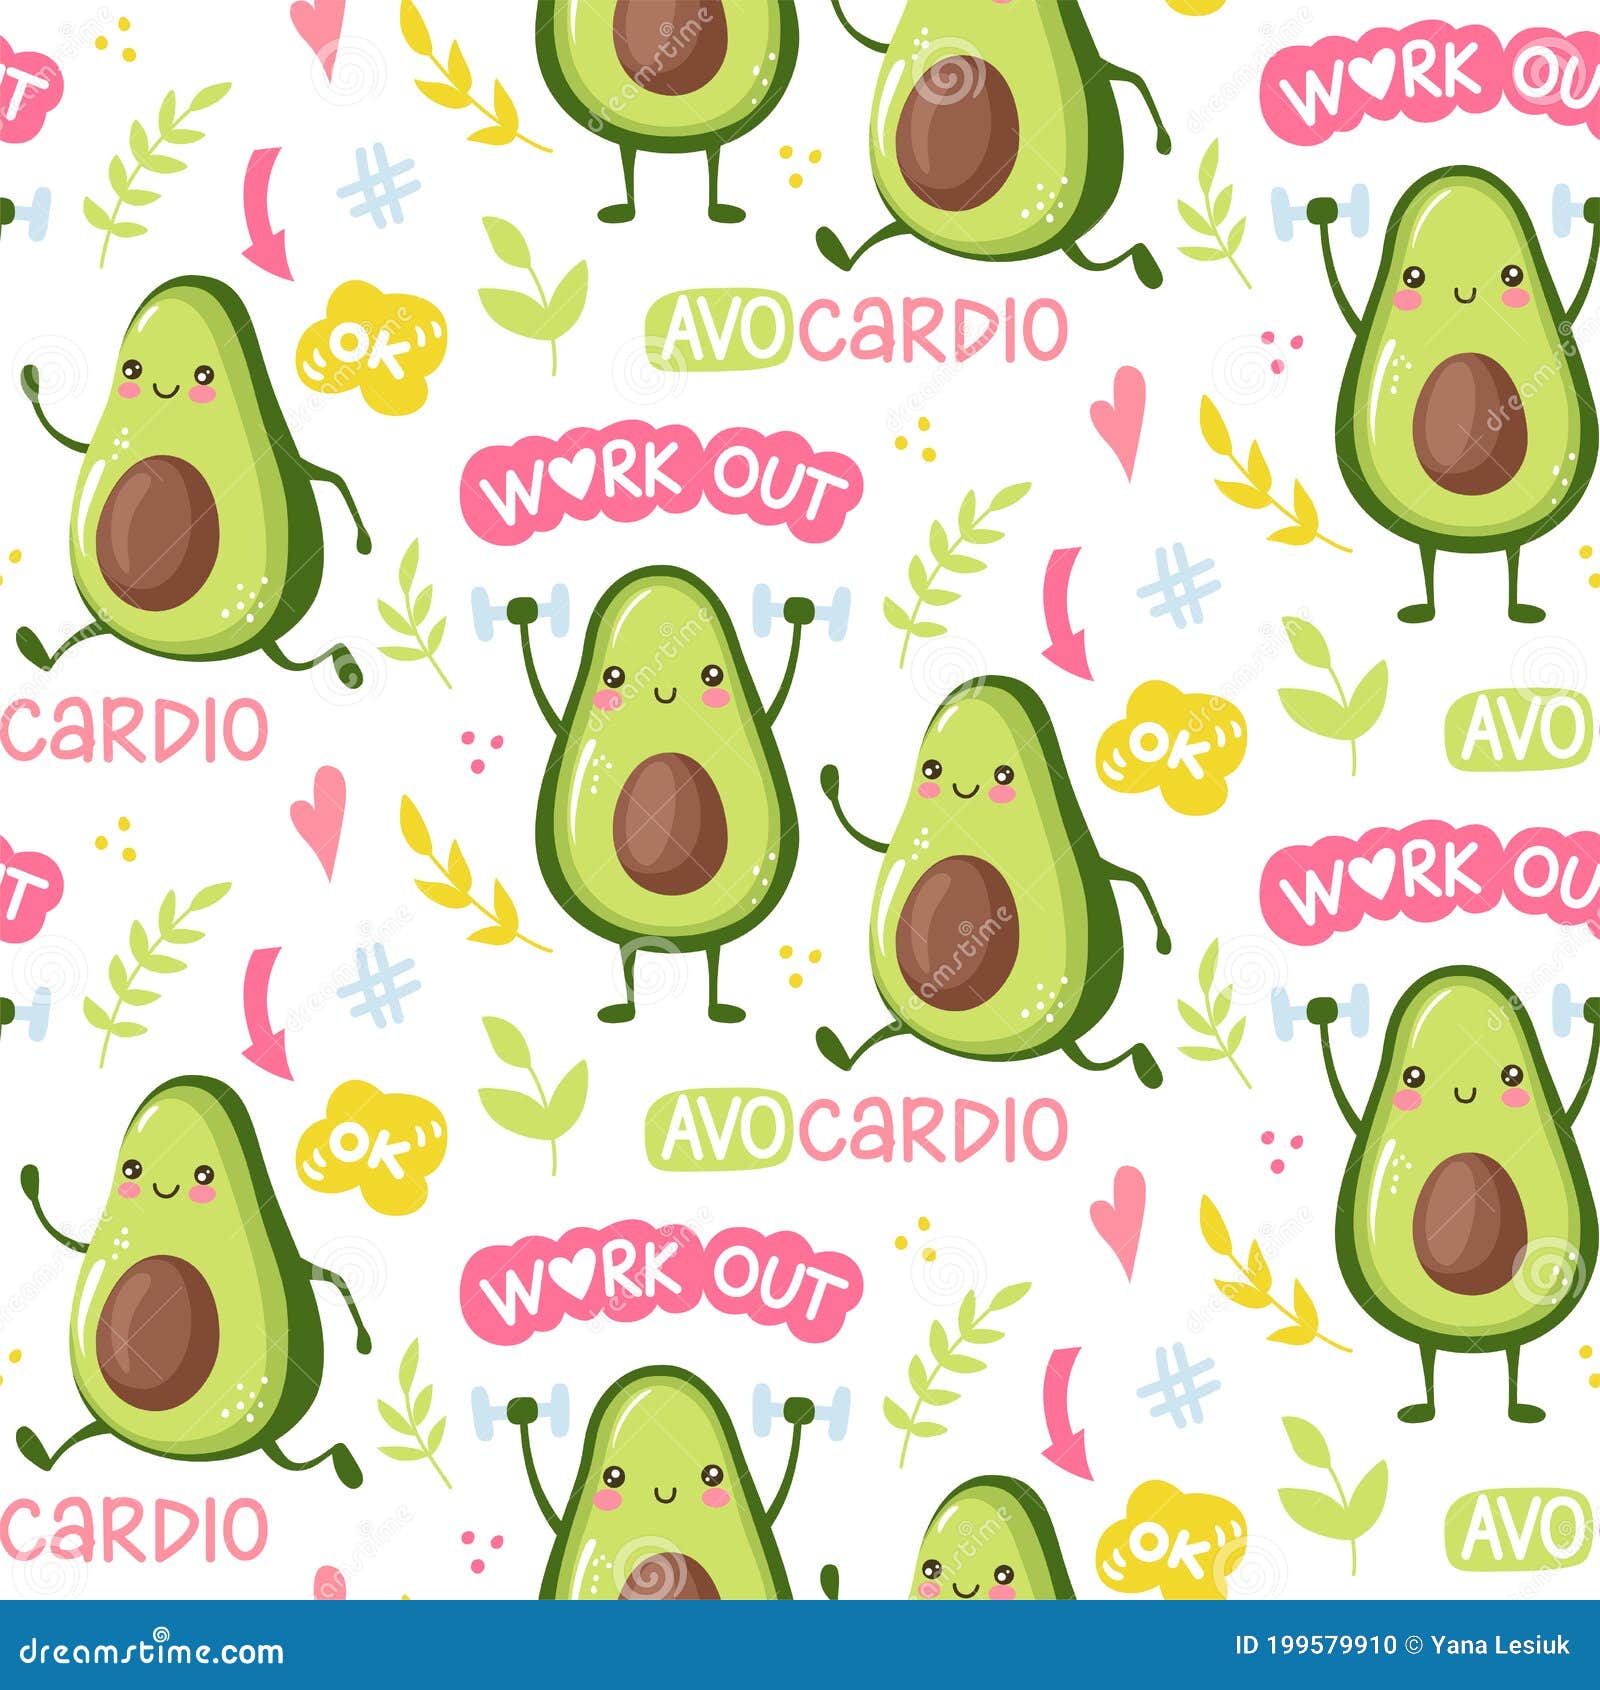 Cute Avocado wallpaper by Animalloverthehero  Download on ZEDGE  3cf5